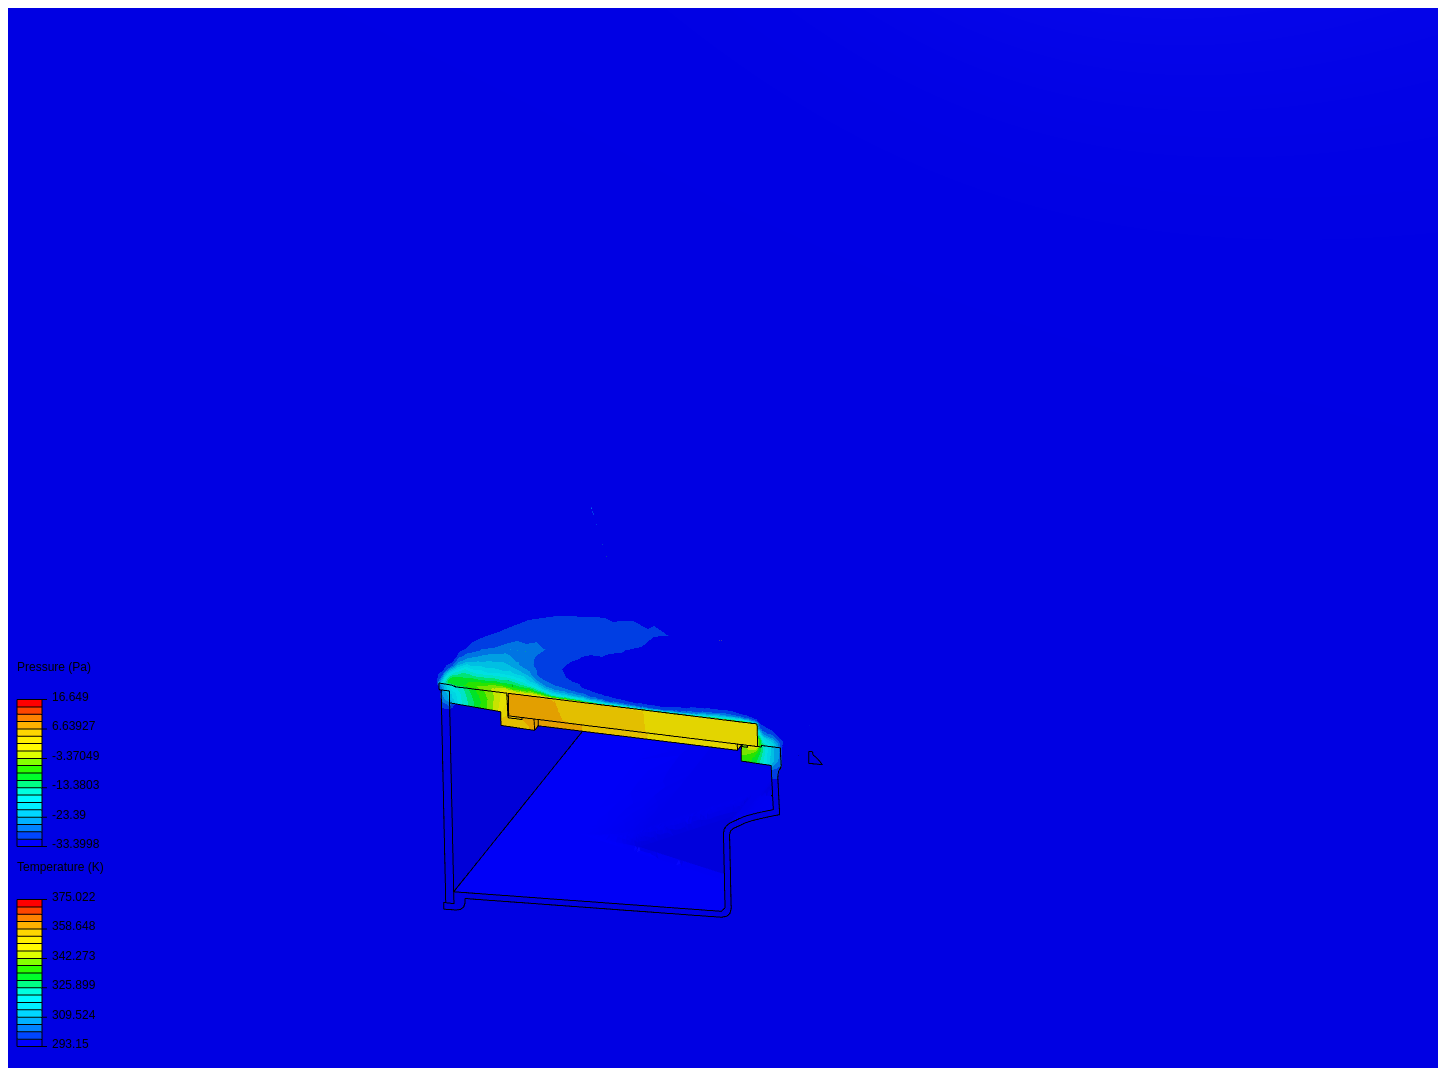 Carbon G1 Simulation - Radiation image